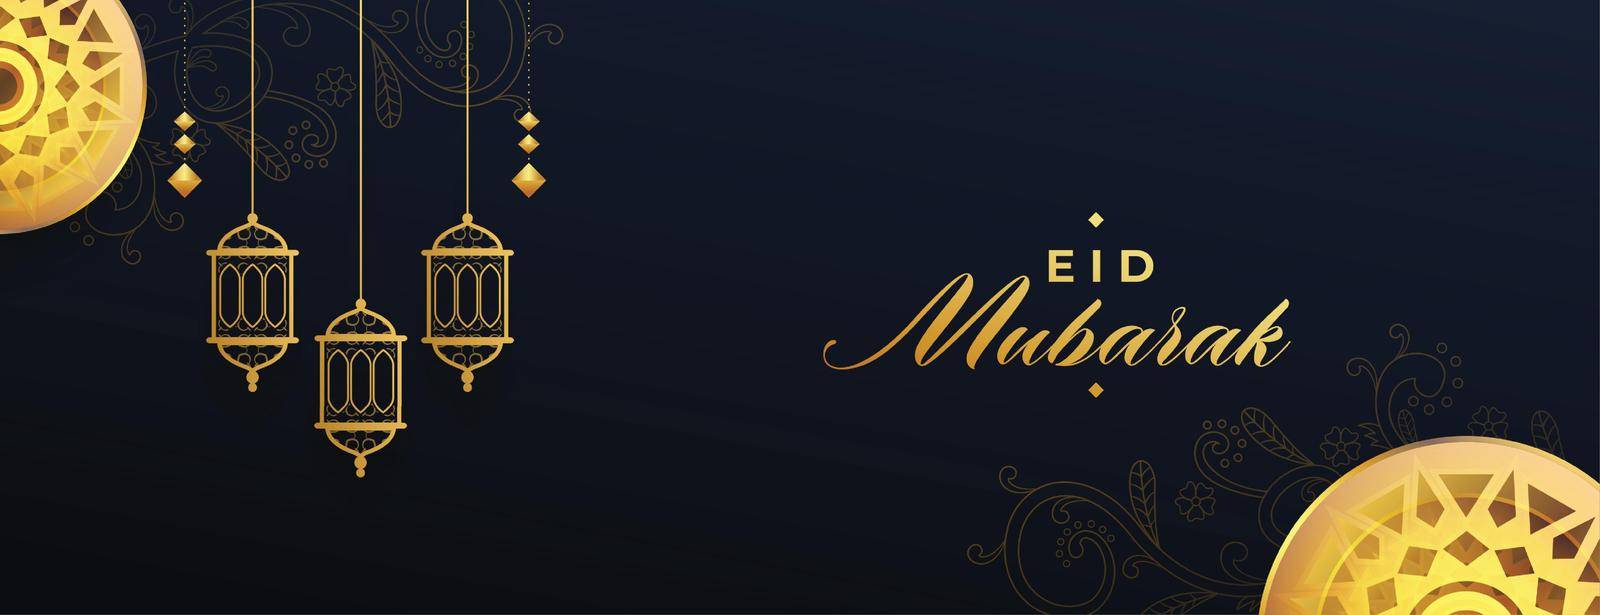 eid mubarak golden and black banner with lantern design